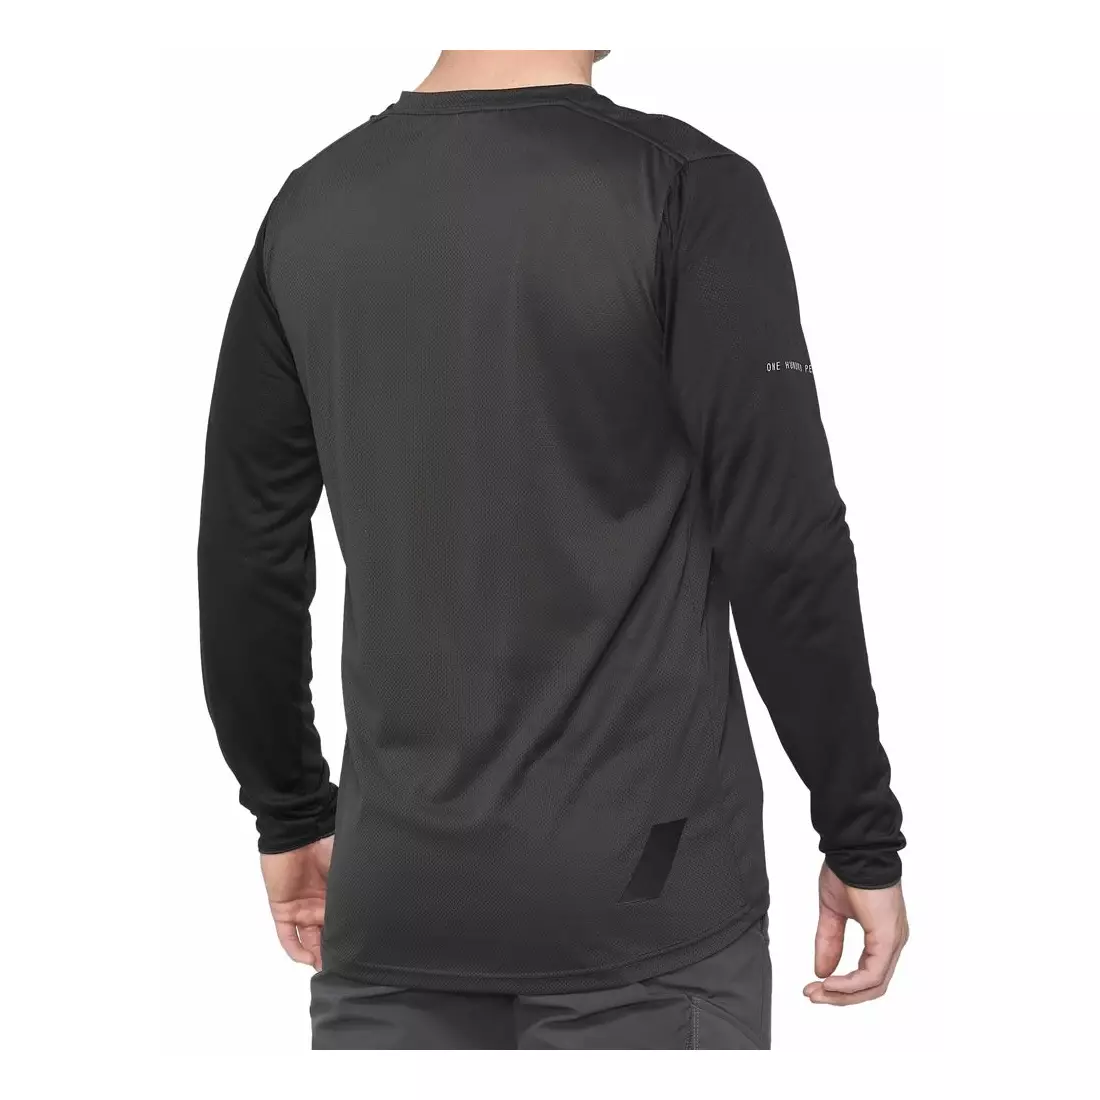 100% long sleeve men's shirt ridecamp black charcoal STO-41402-181-10